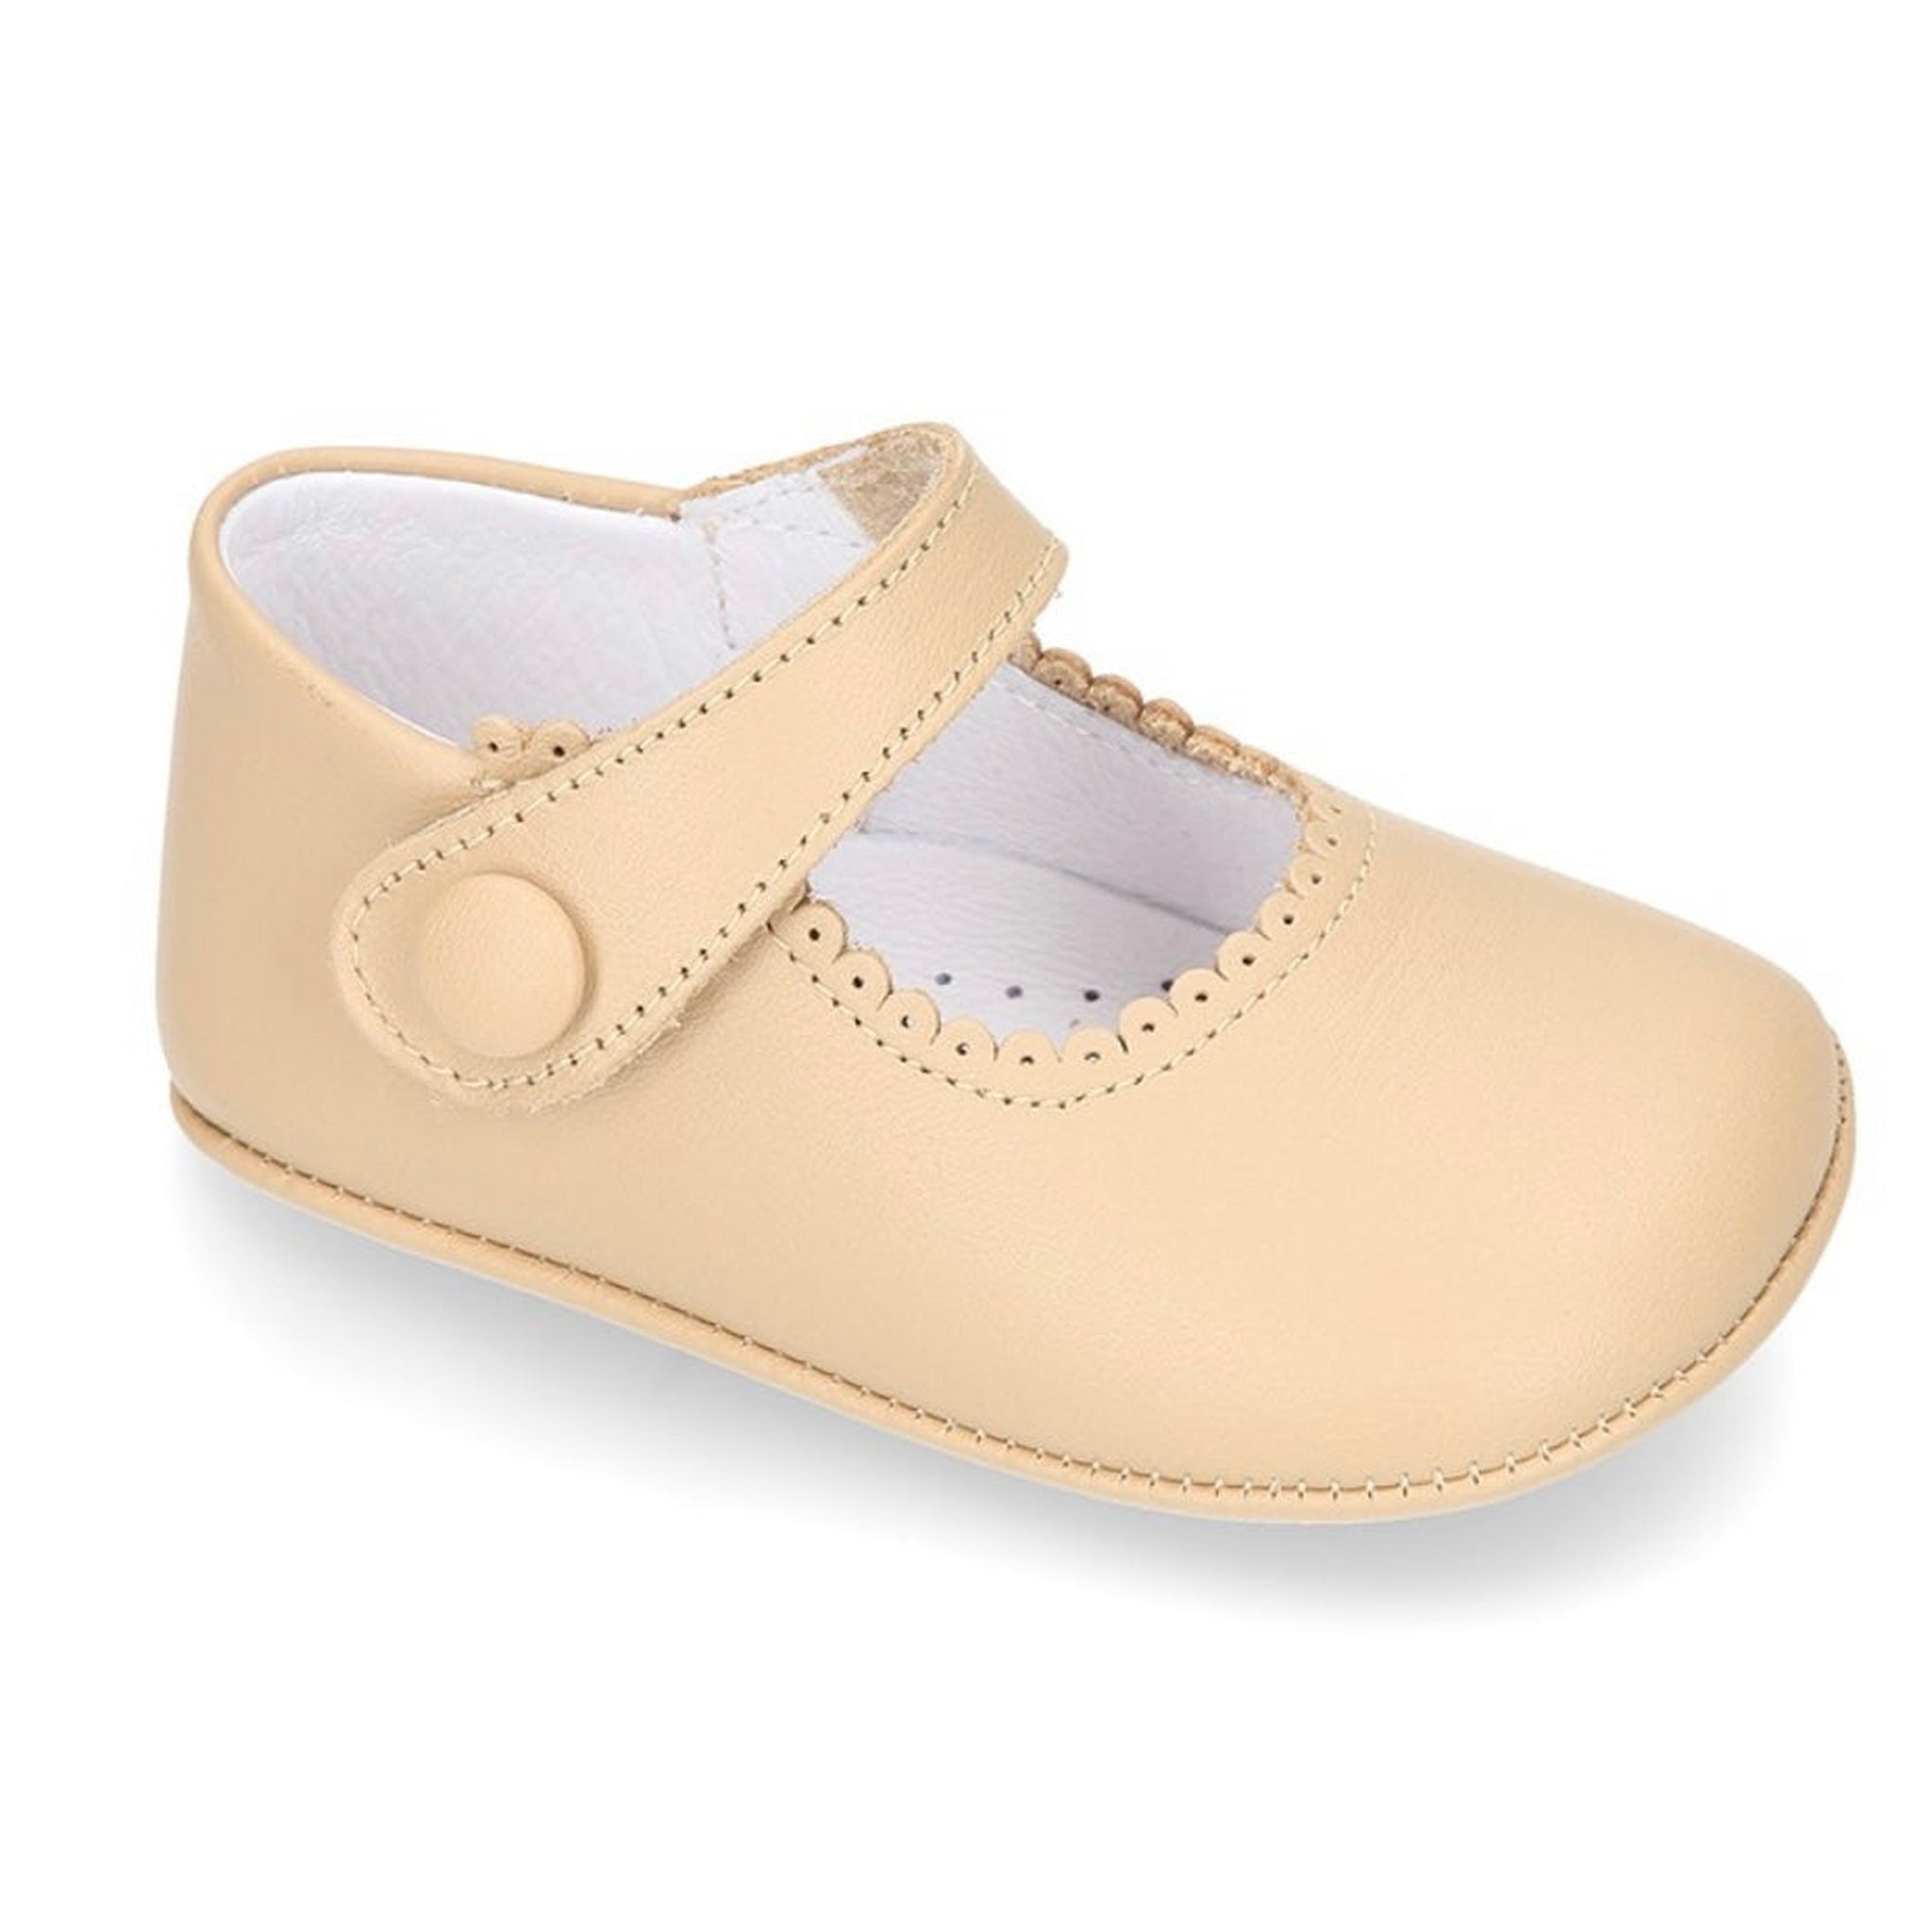 Mary Jane Leather Crib Shoes - Camel